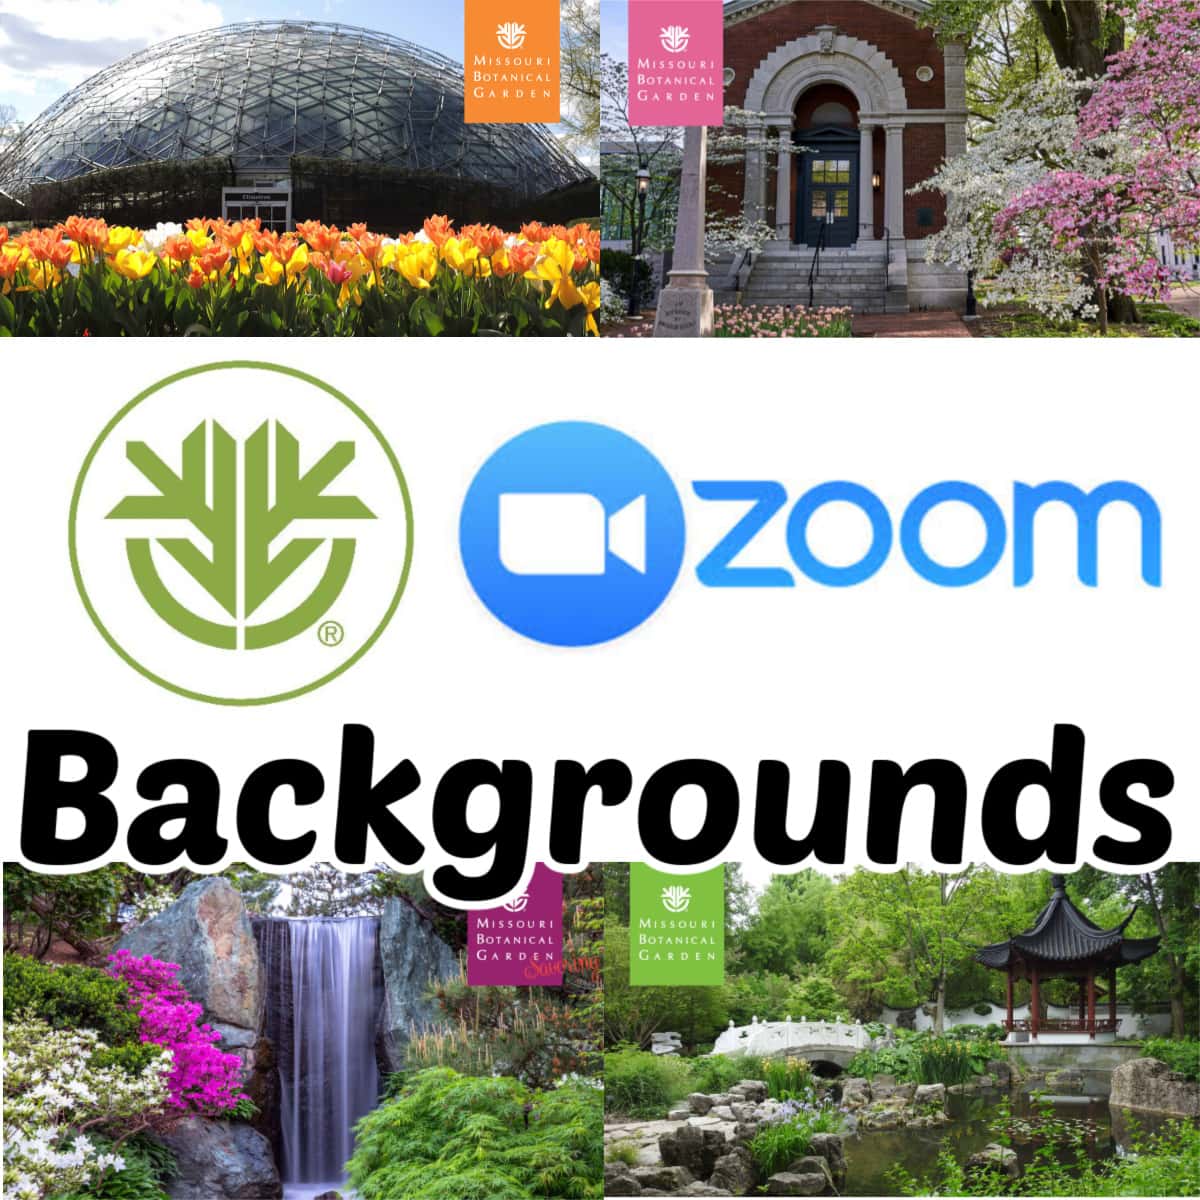 Missouri Botanical Garden Backgrounds graphic